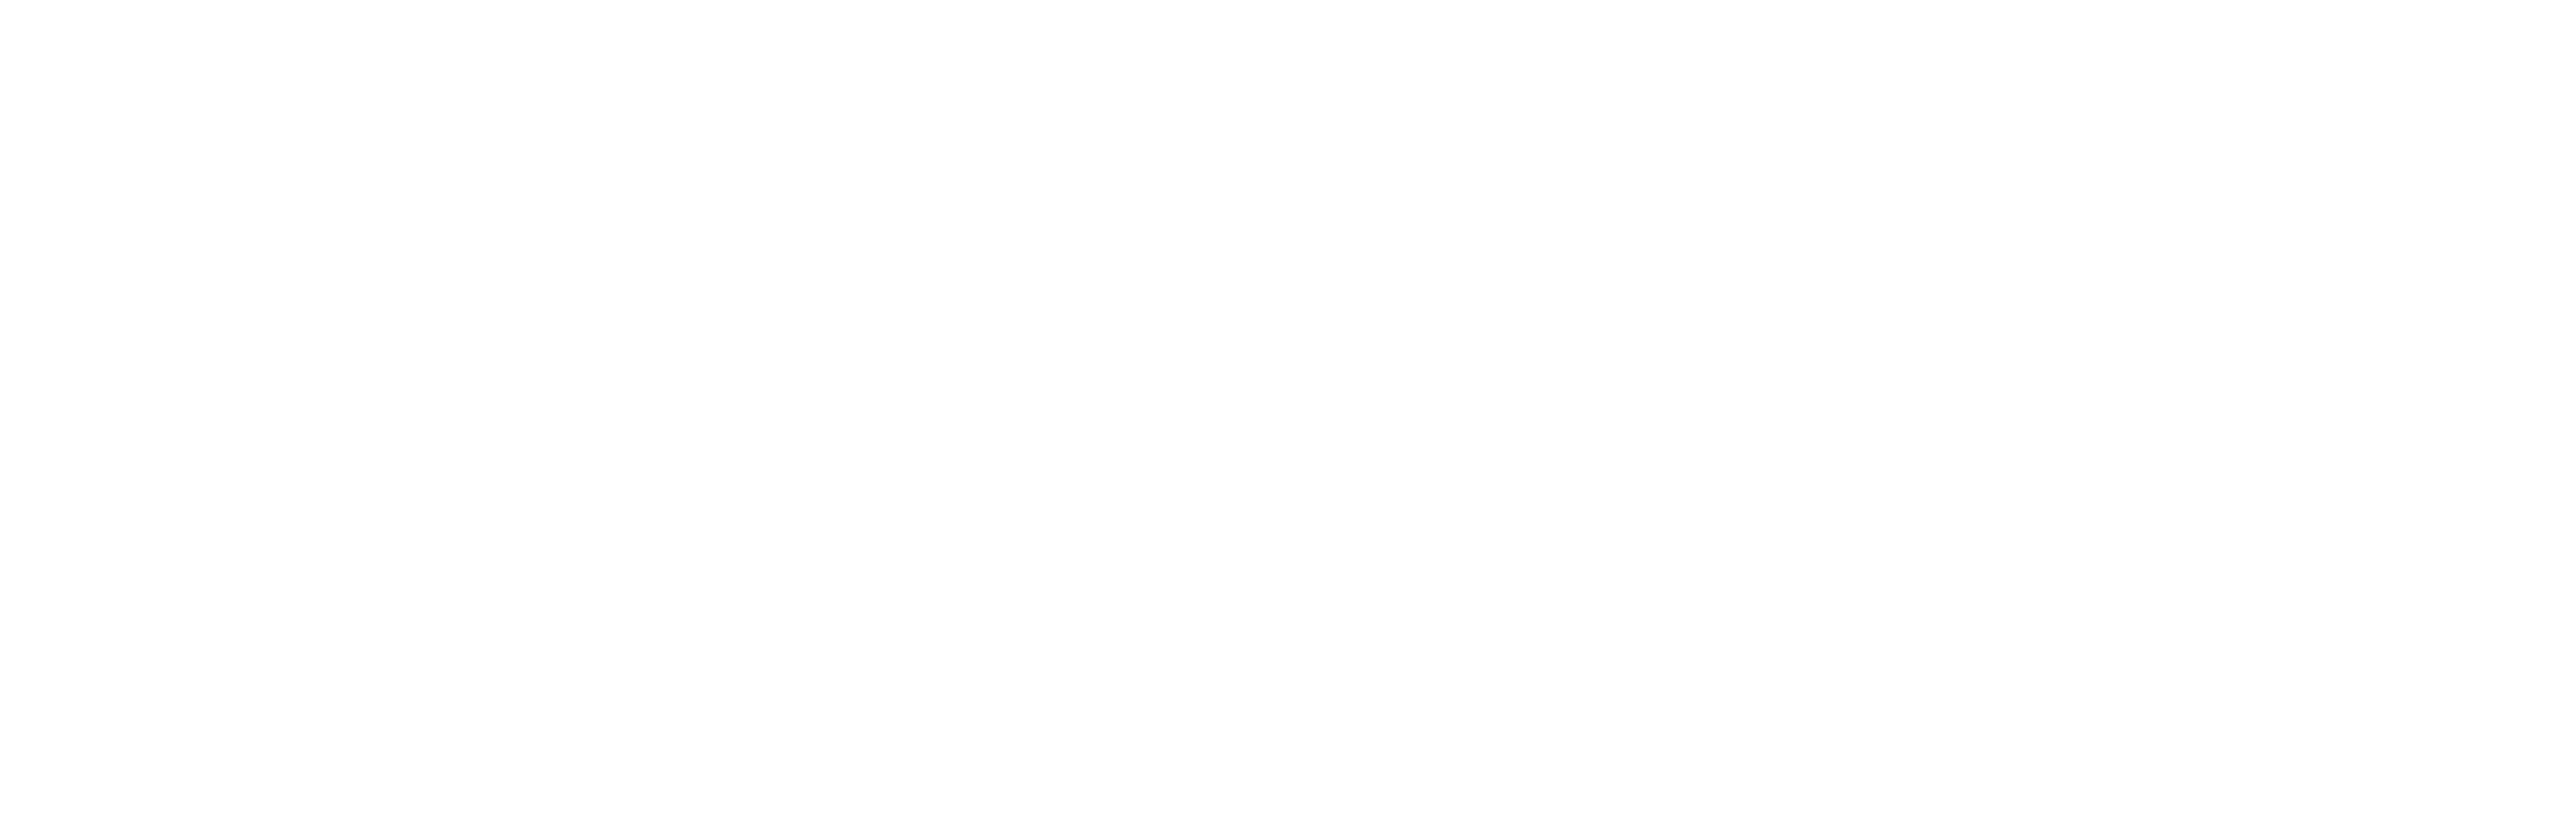 somawathiya-rajamaha-viharaya